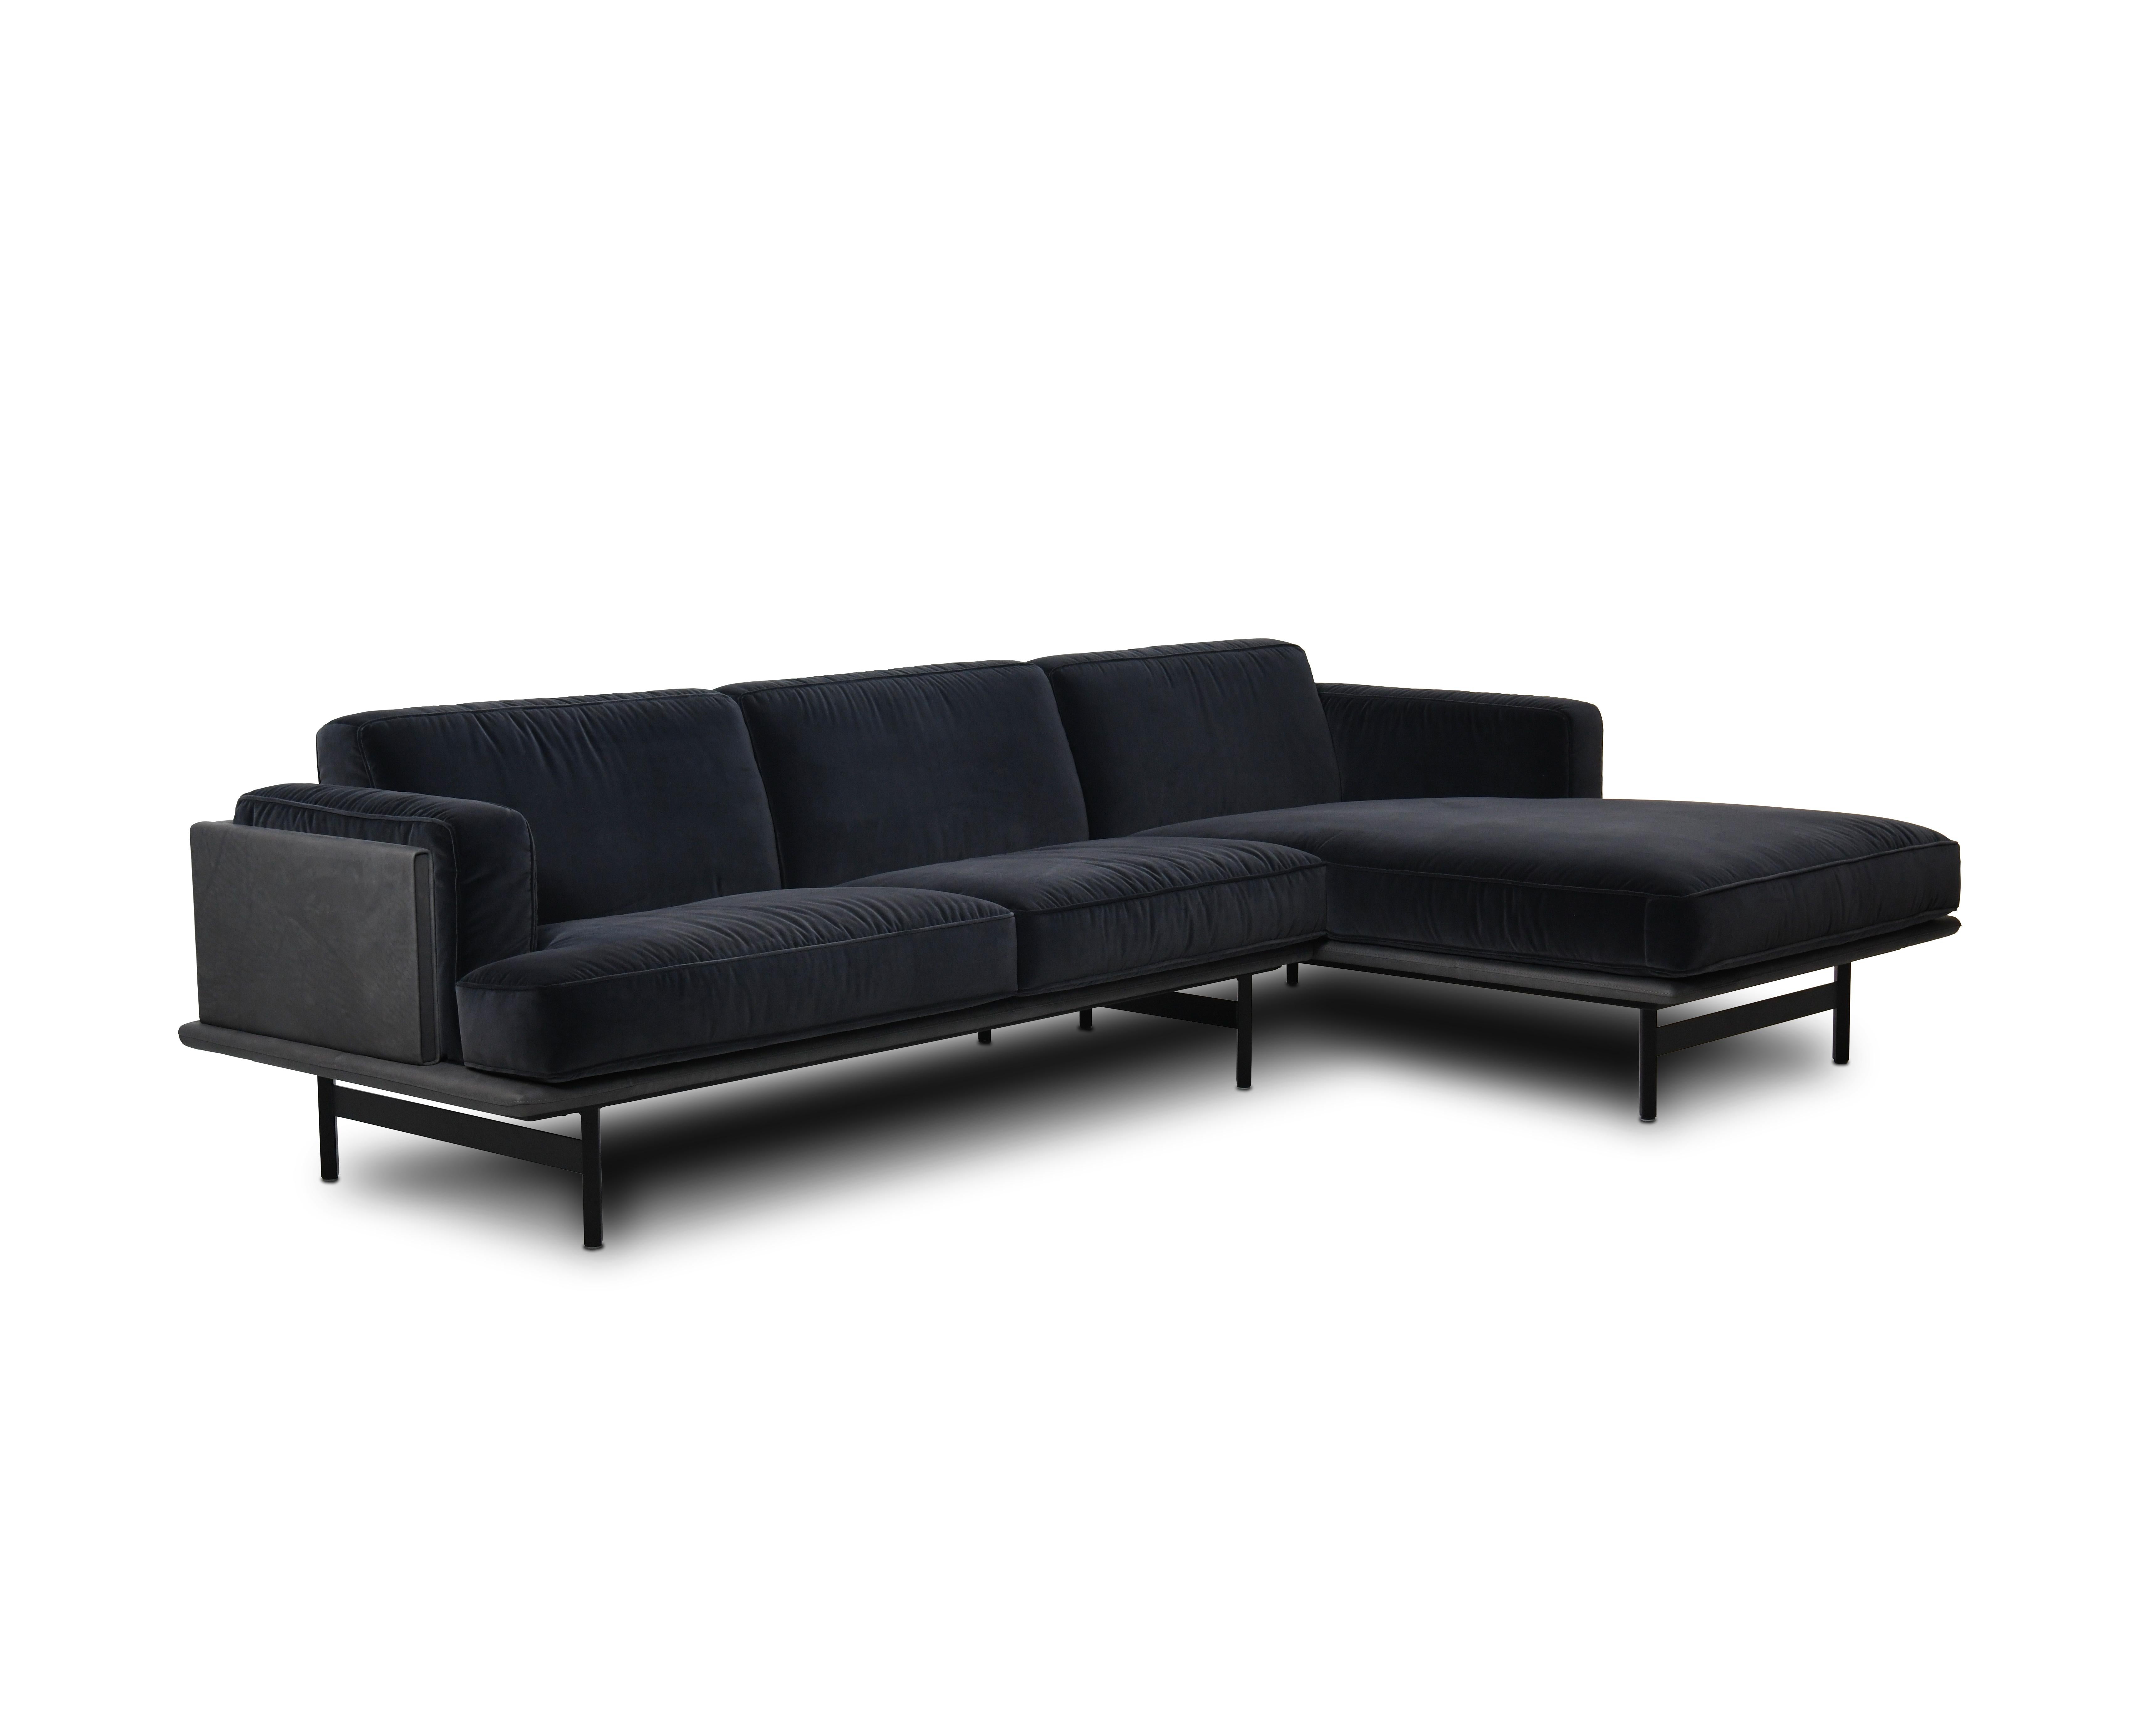 Steel DS-175 Sofa by De Sede For Sale